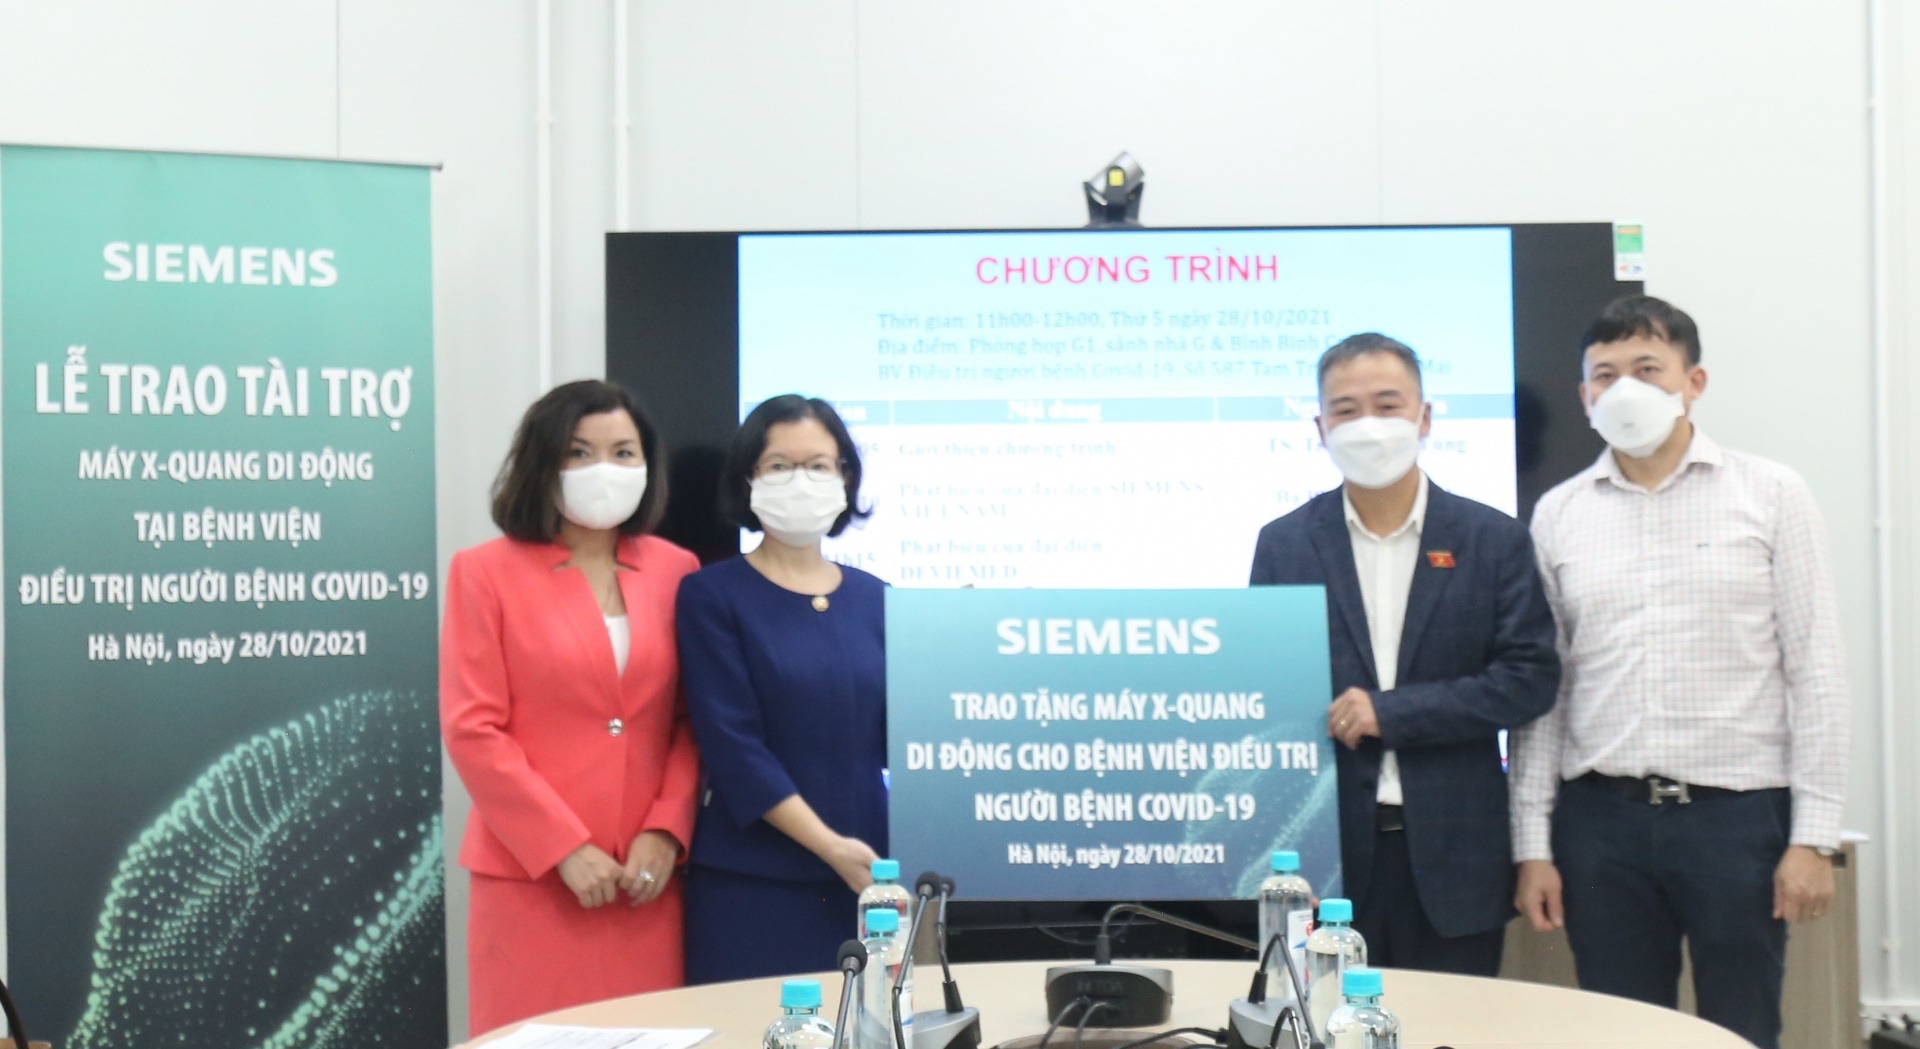 Siemens Caring Hands donates medical equipment to Vietnamese hospitals